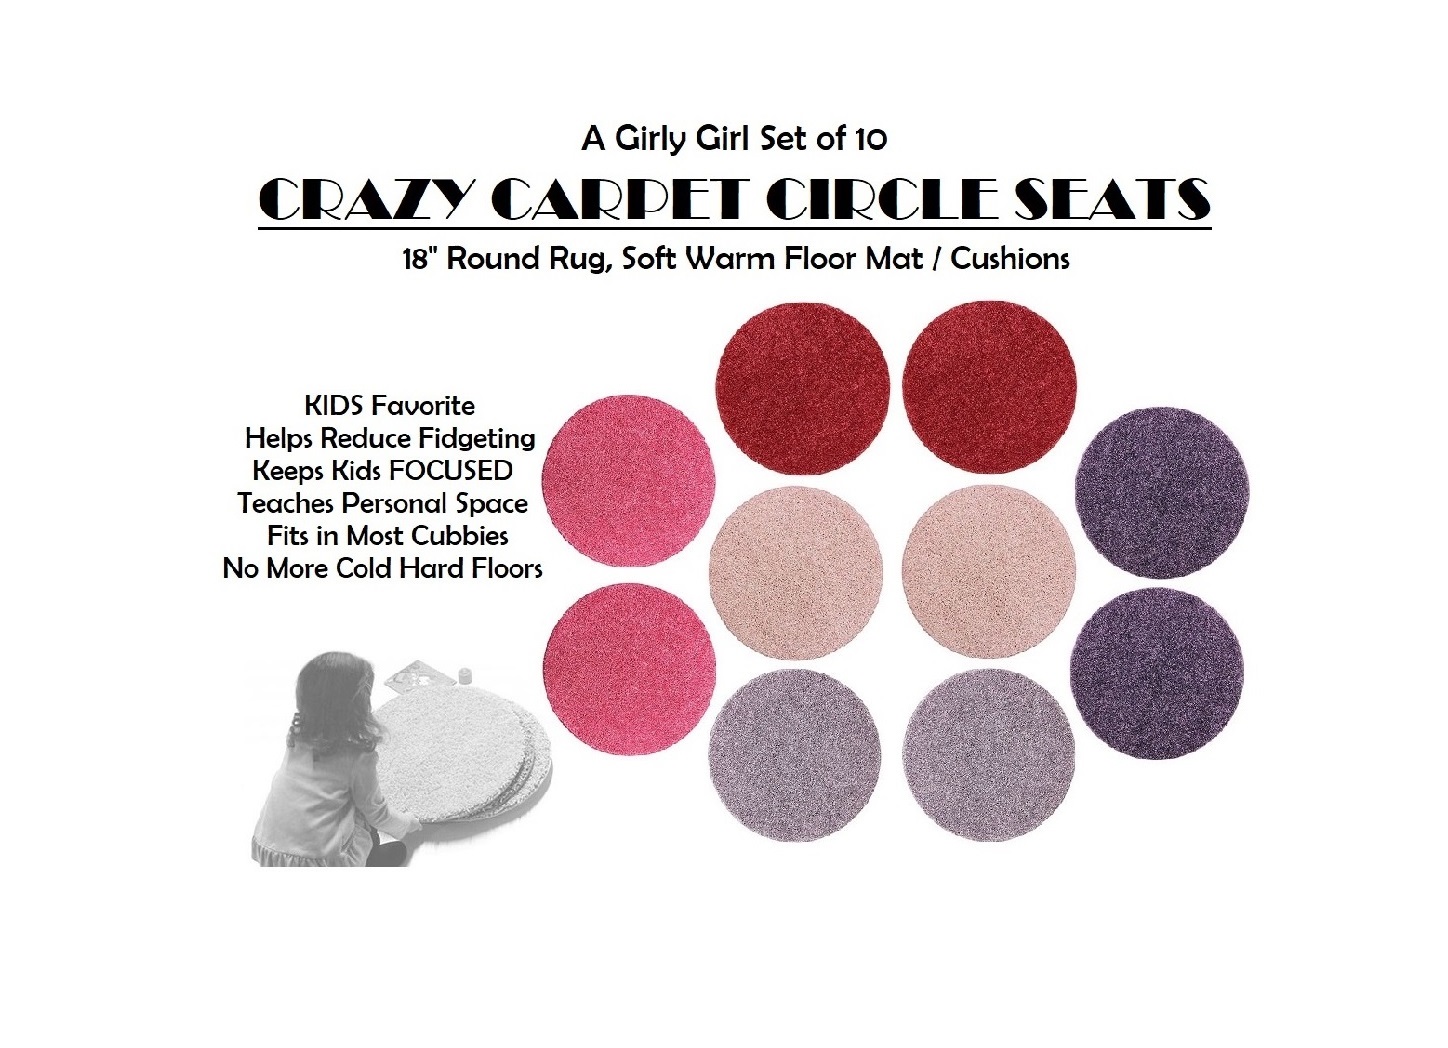 Children’s Crazy Carpet Circle Seats A Girly Girl Set 10